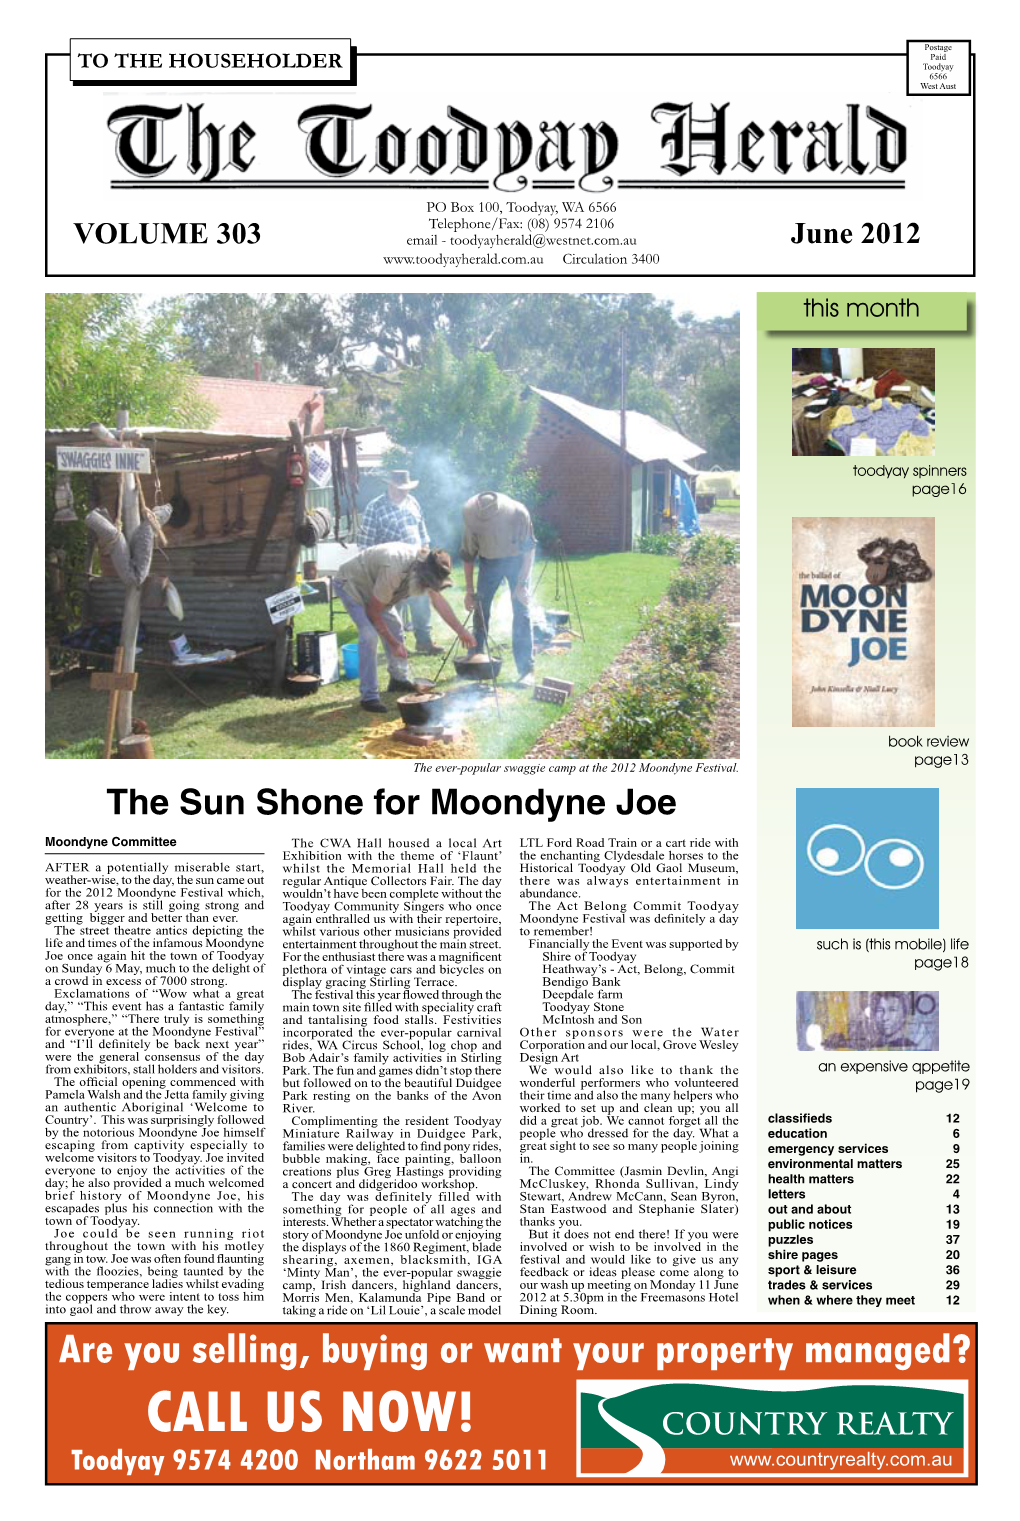 The Sun Shone for Moondyne Joe